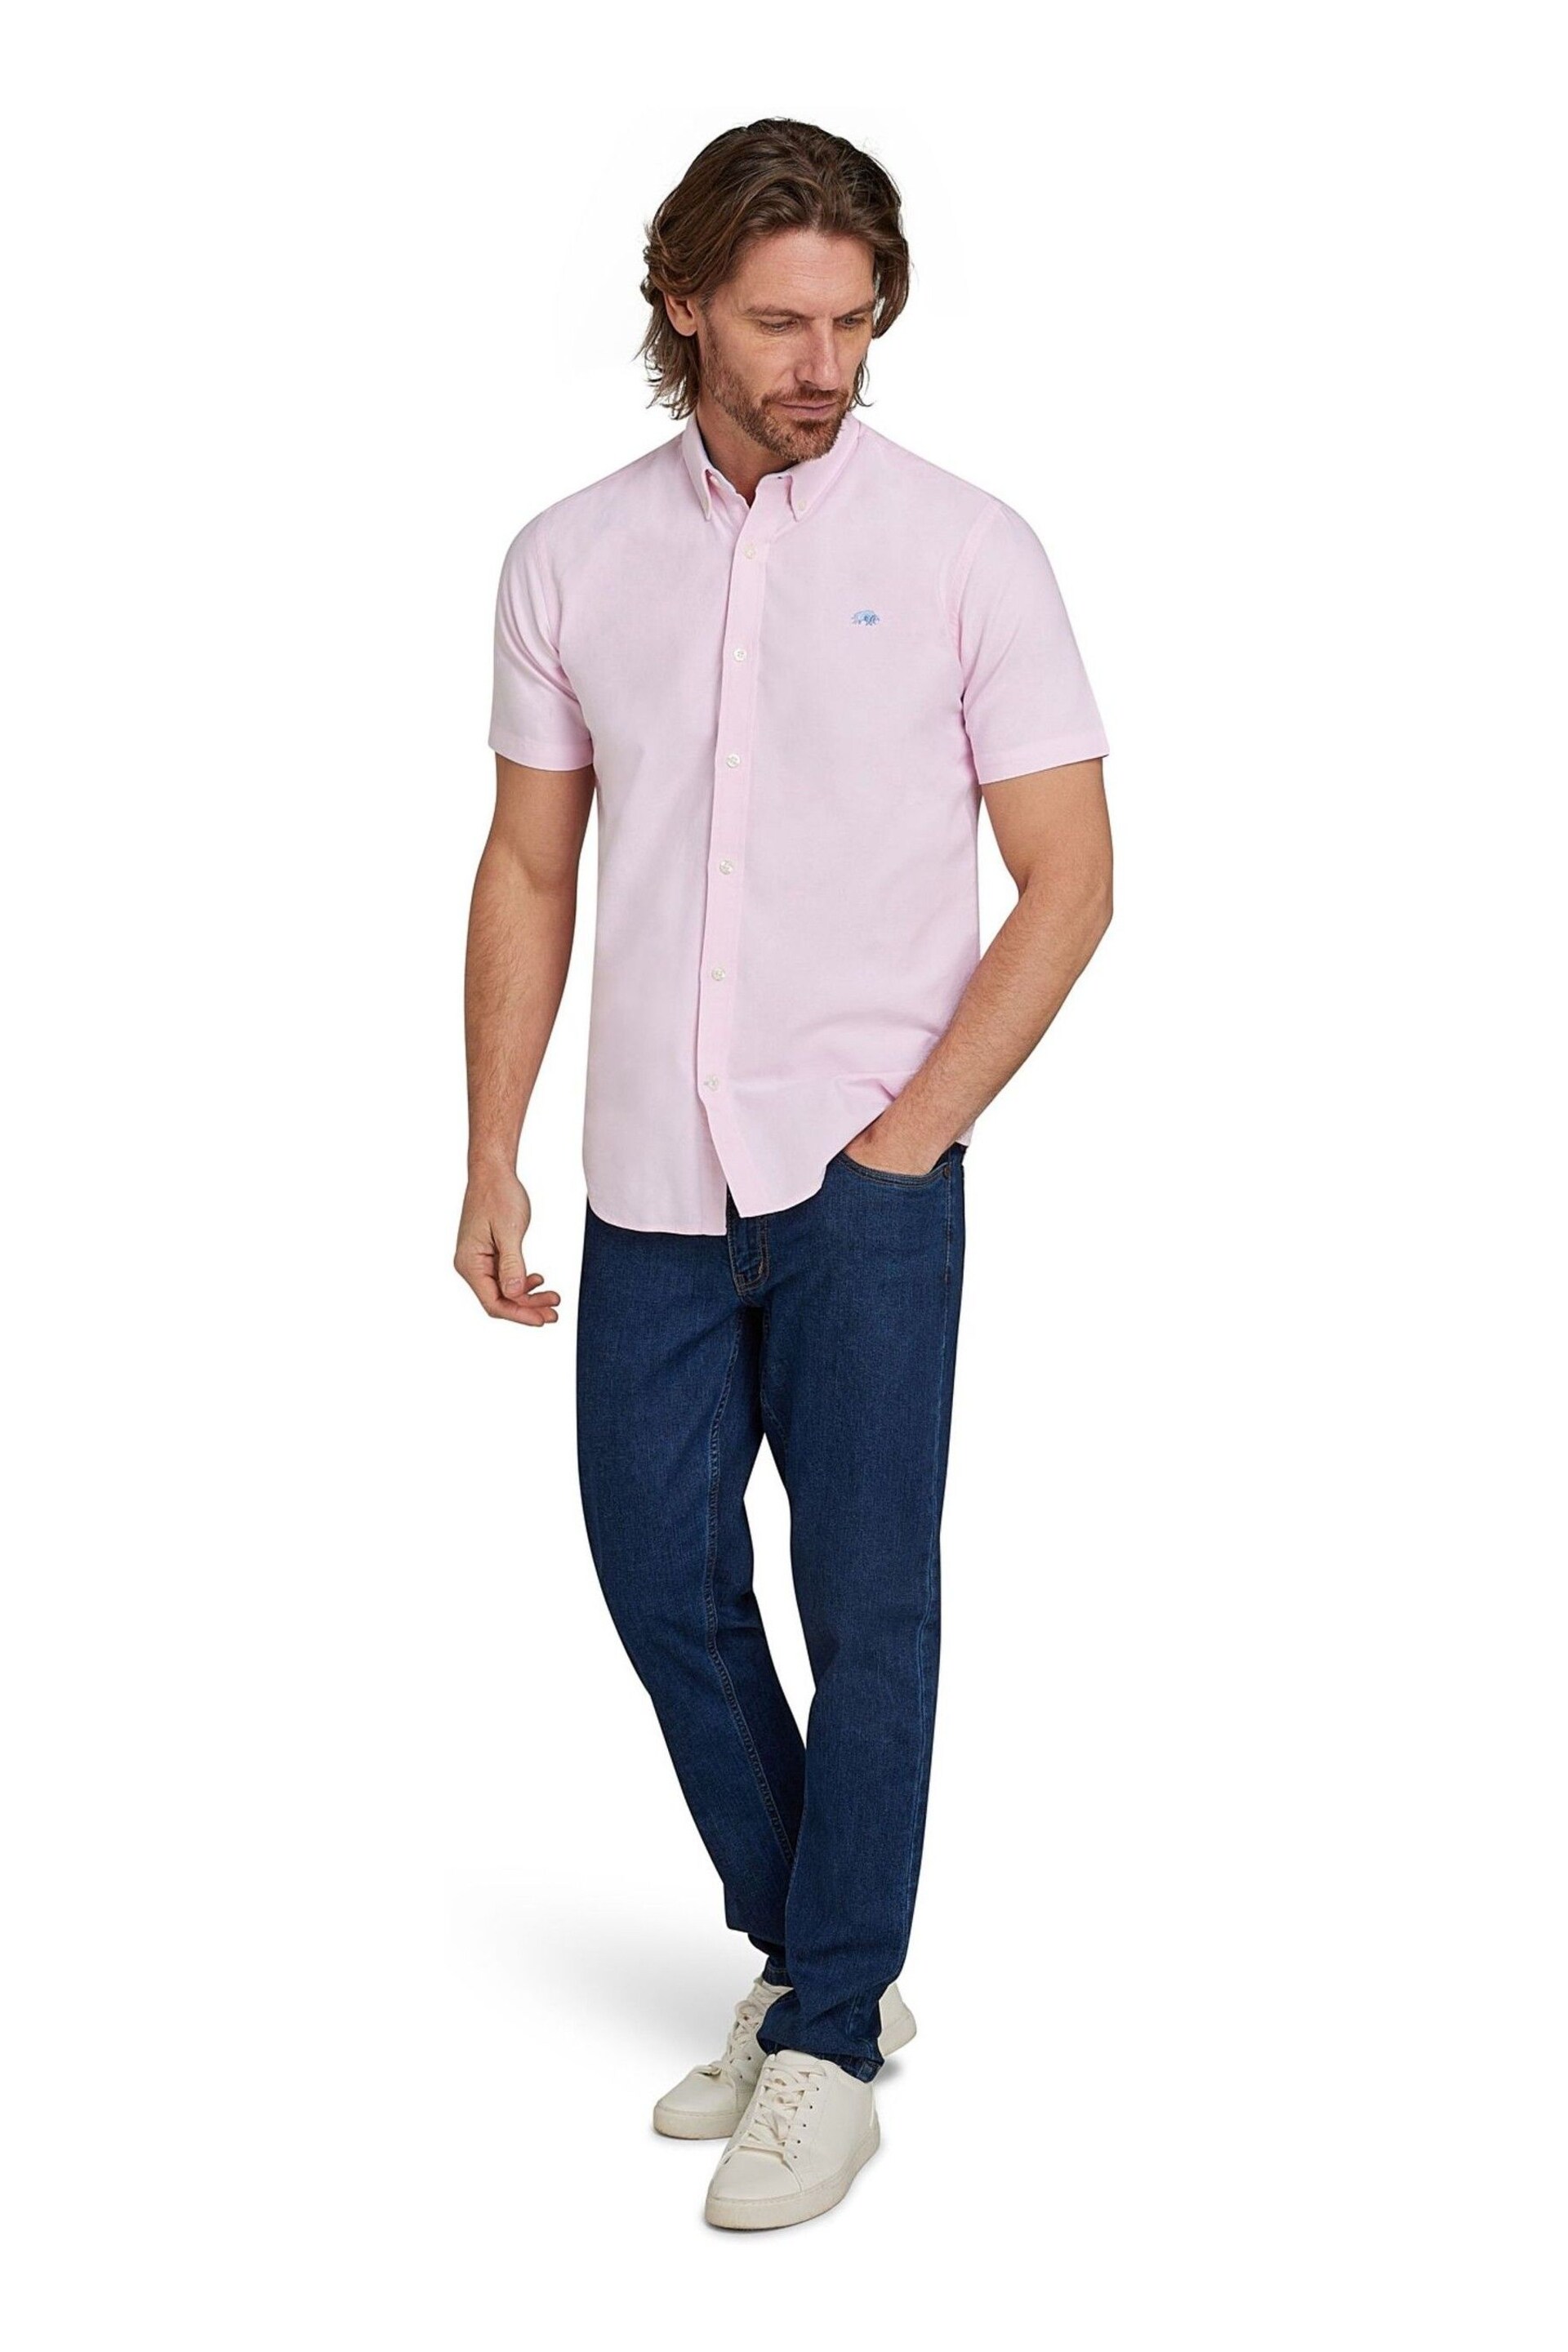 Raging Bull Pink Short Sleeve Lightweight Oxford Shirt - Image 2 of 7